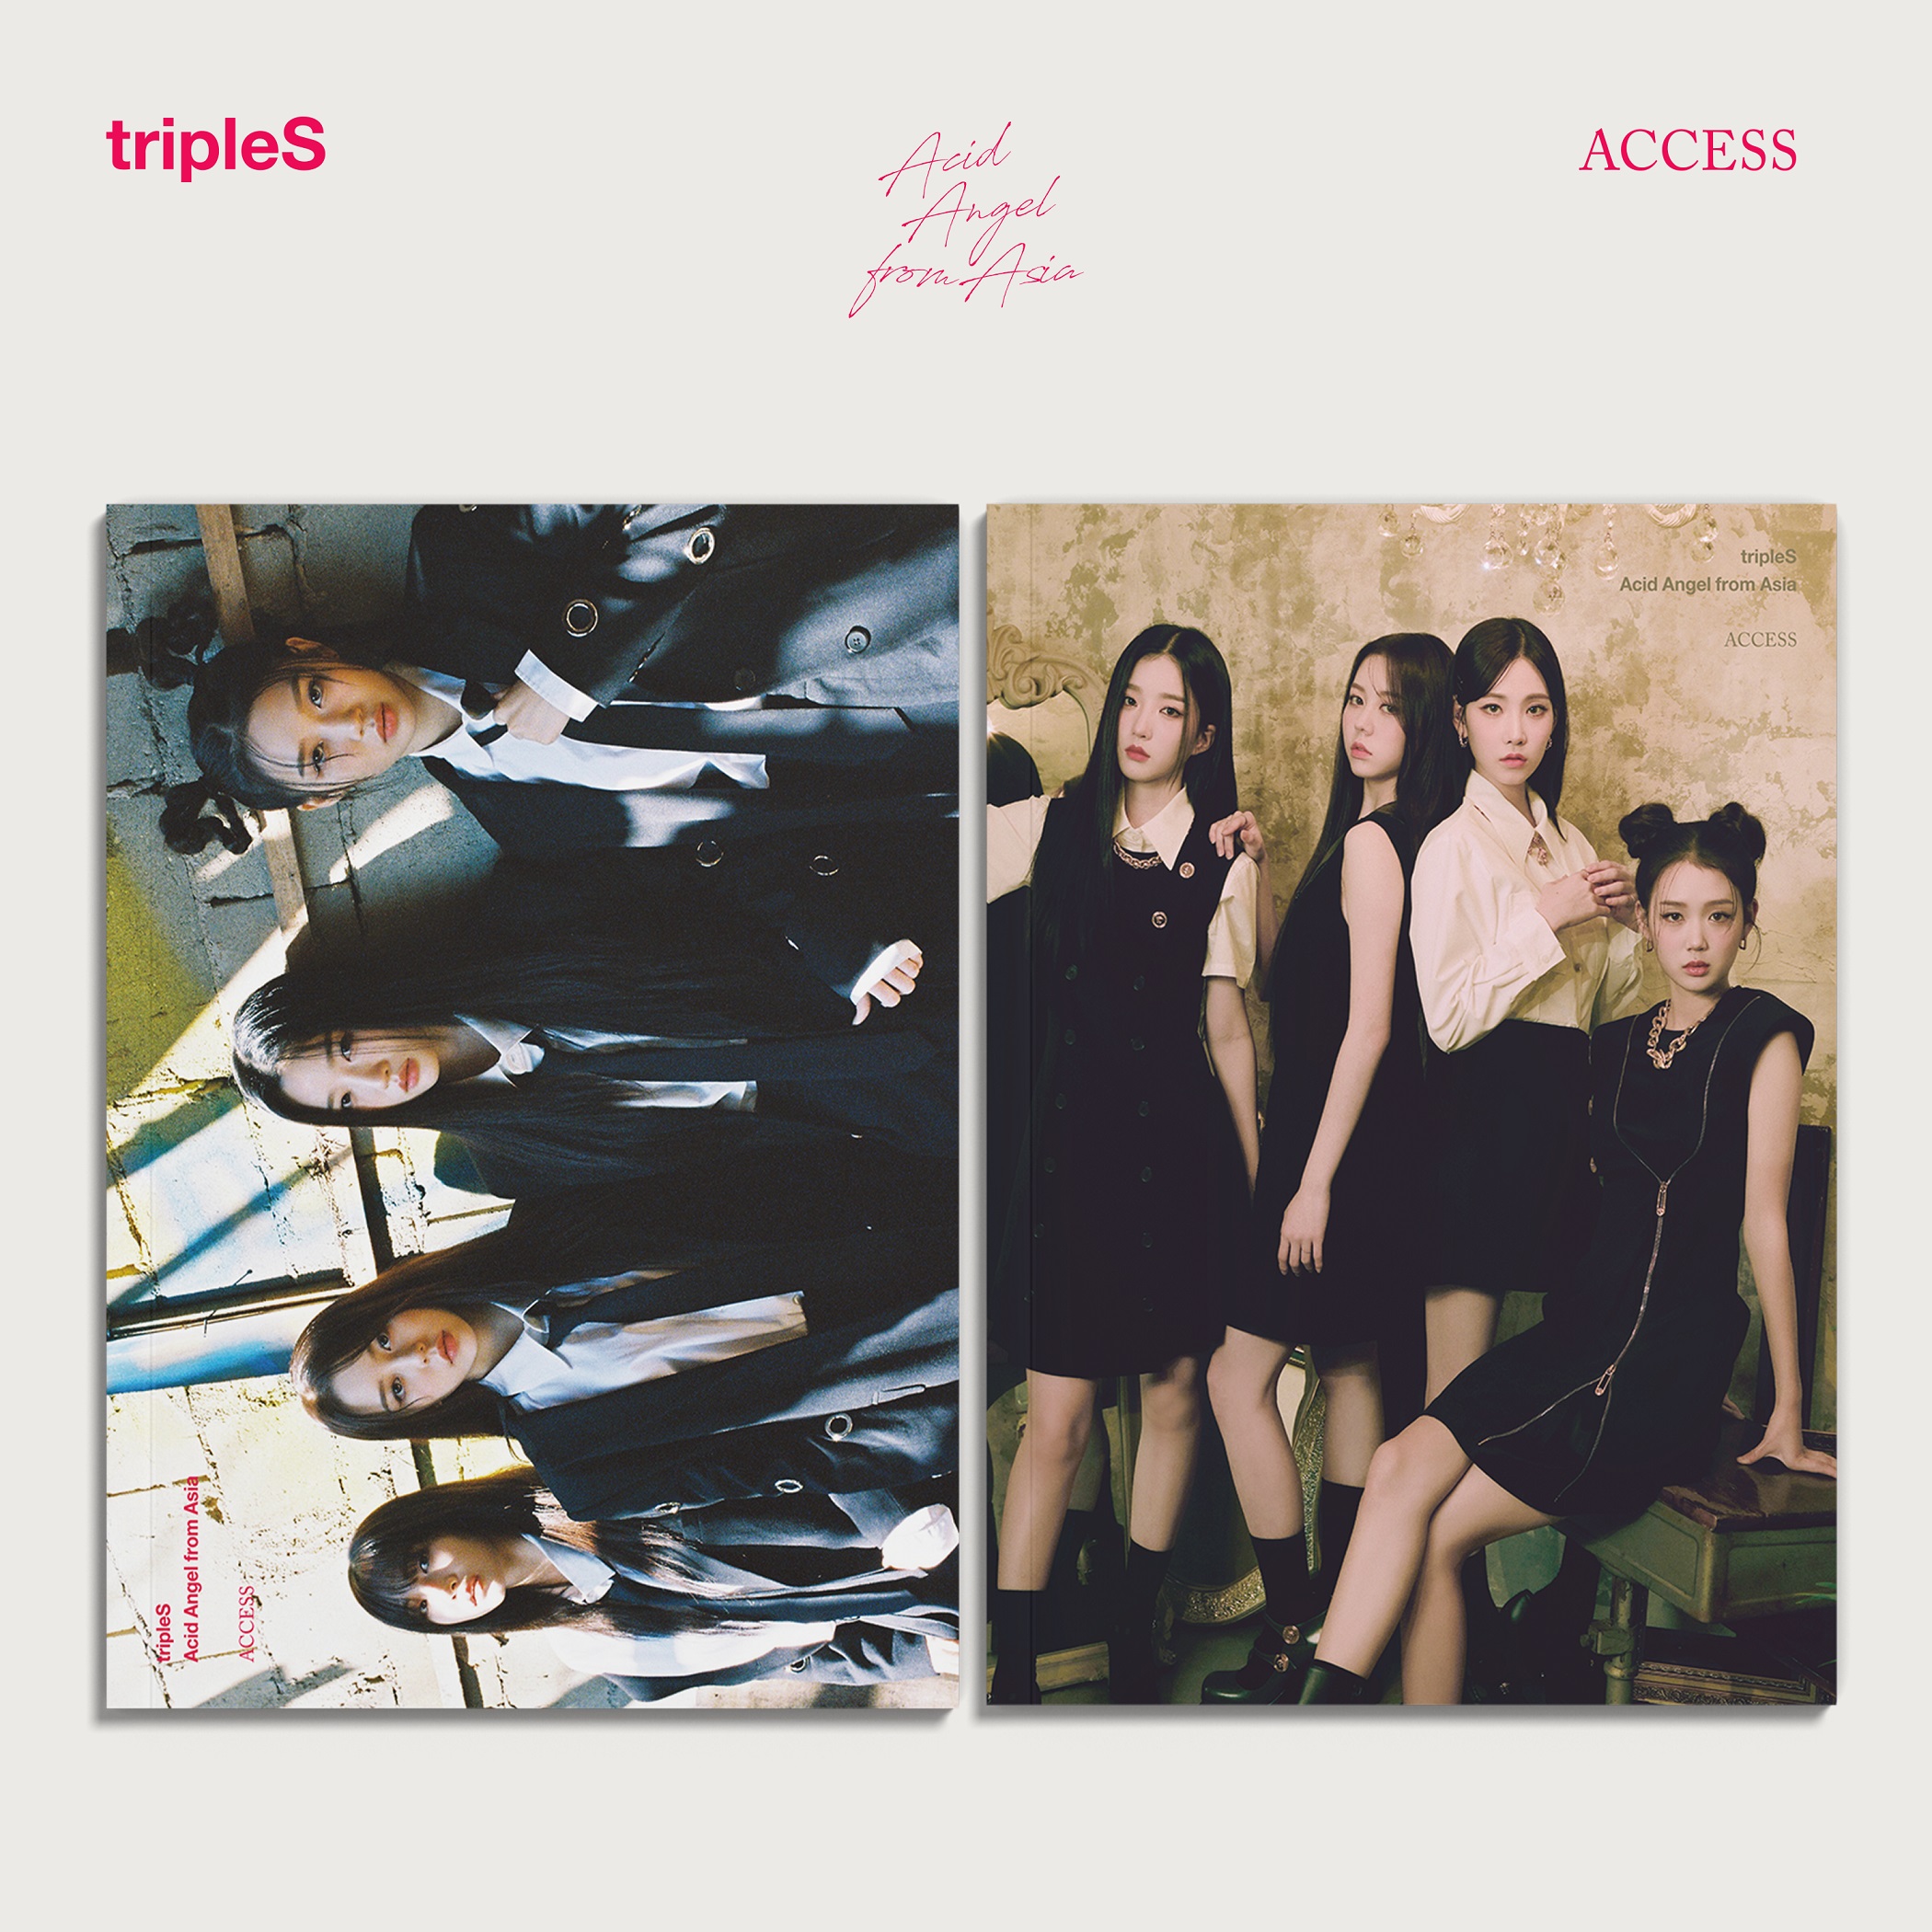 [视频签售活动][全款 裸专] [2CD 套装] tripleS - Acid Angel from Asia [ACCESS] (A ver. + B ver.)_KimNaKyoung_BlowMyMind